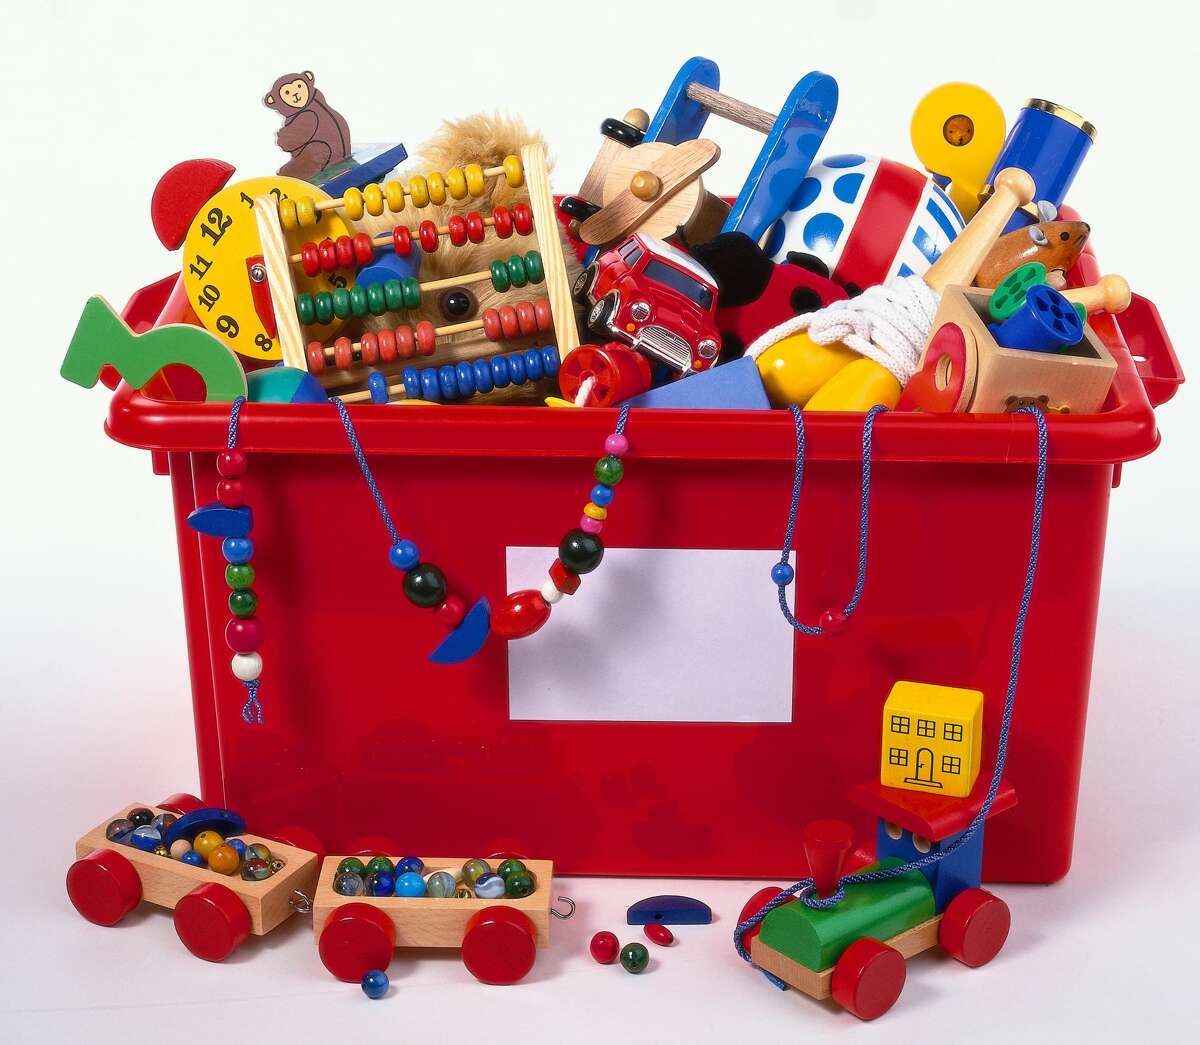 3 in the toy box. Игрушки для детей. Разные игрушки для детей. Много игрушек для детей. Куча игрушек.